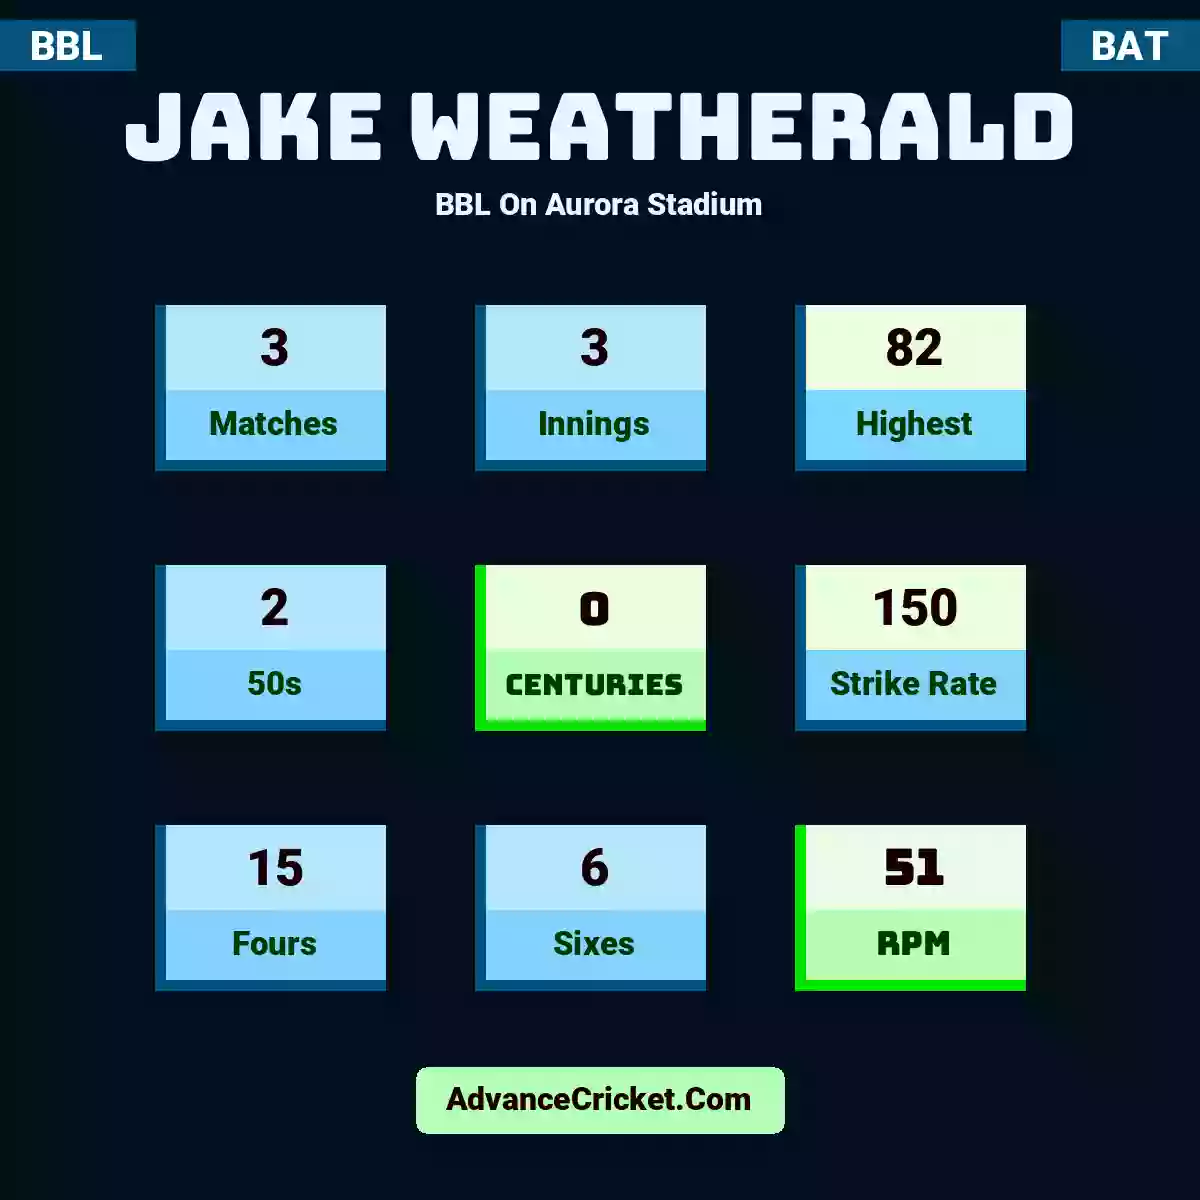 Jake Weatherald BBL  On Aurora Stadium, Jake Weatherald played 3 matches, scored 82 runs as highest, 2 half-centuries, and 0 centuries, with a strike rate of 150. J.Weatherald hit 15 fours and 6 sixes, with an RPM of 51.